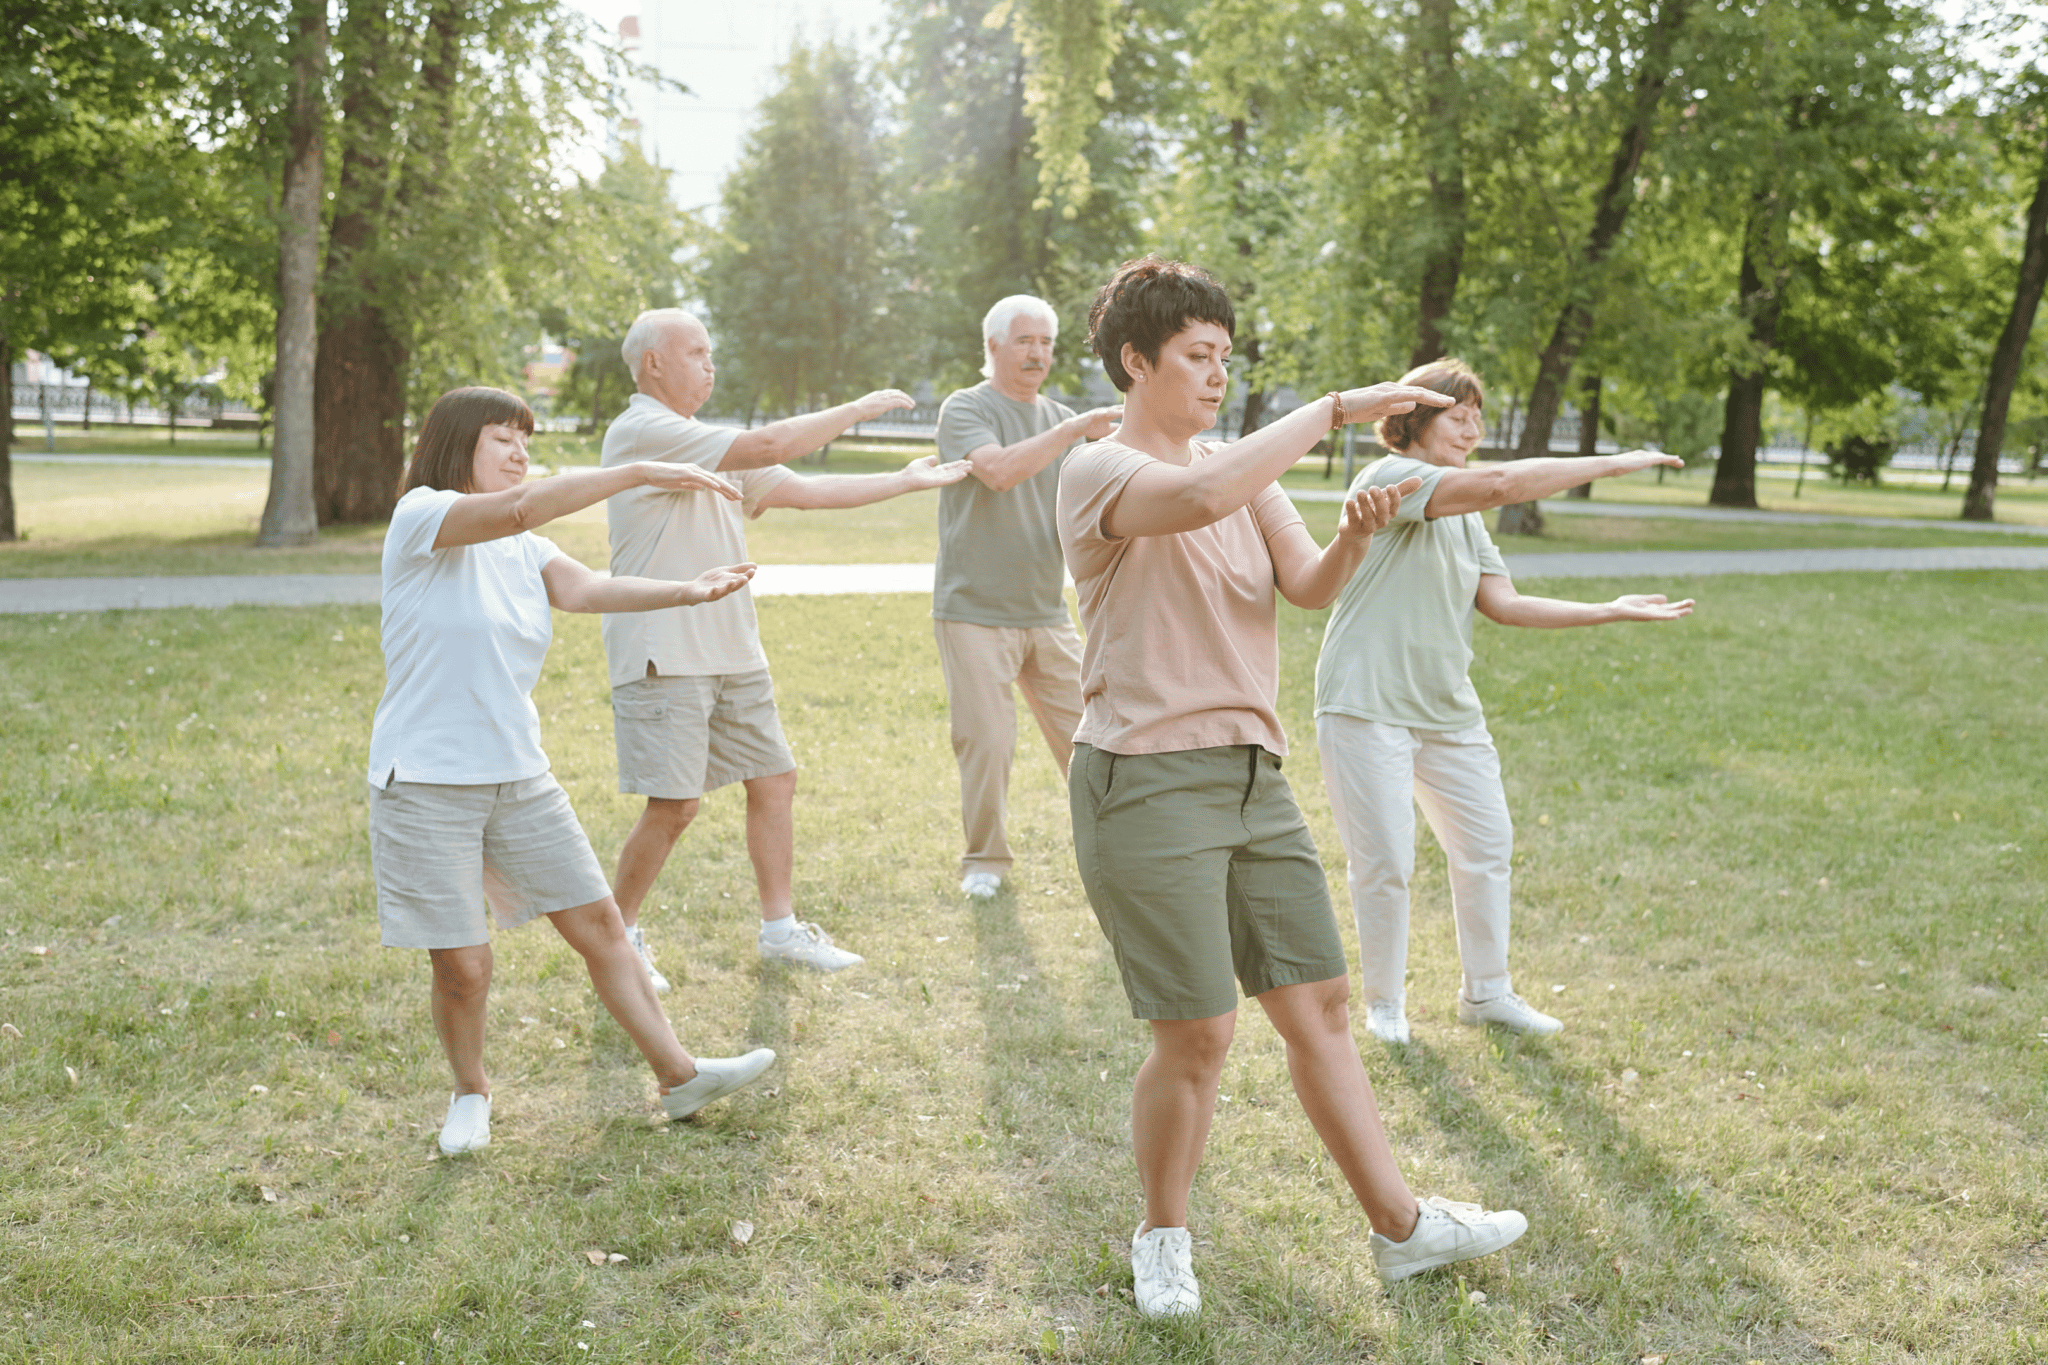 qigong for seniors in park